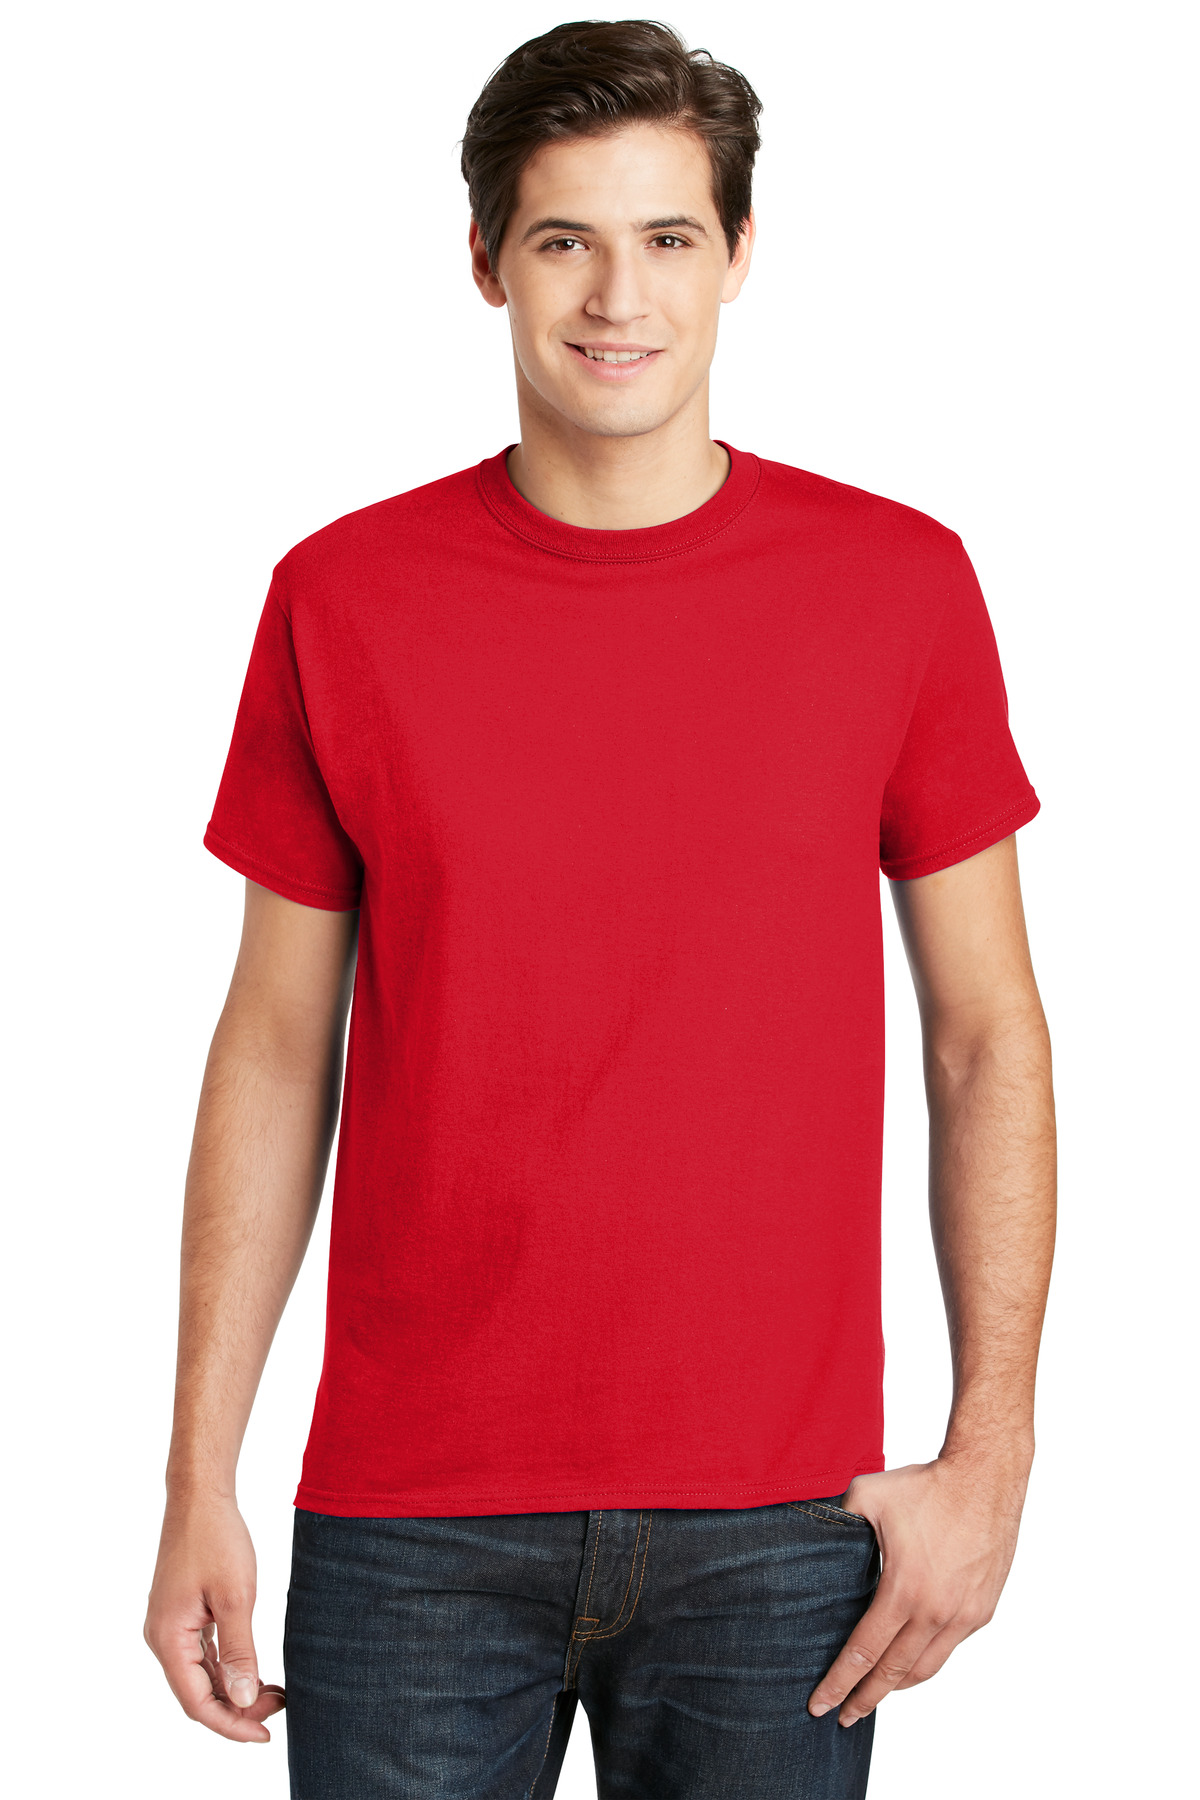 Hanes - Essential-T 100% Cotton T-Shirt - 5280